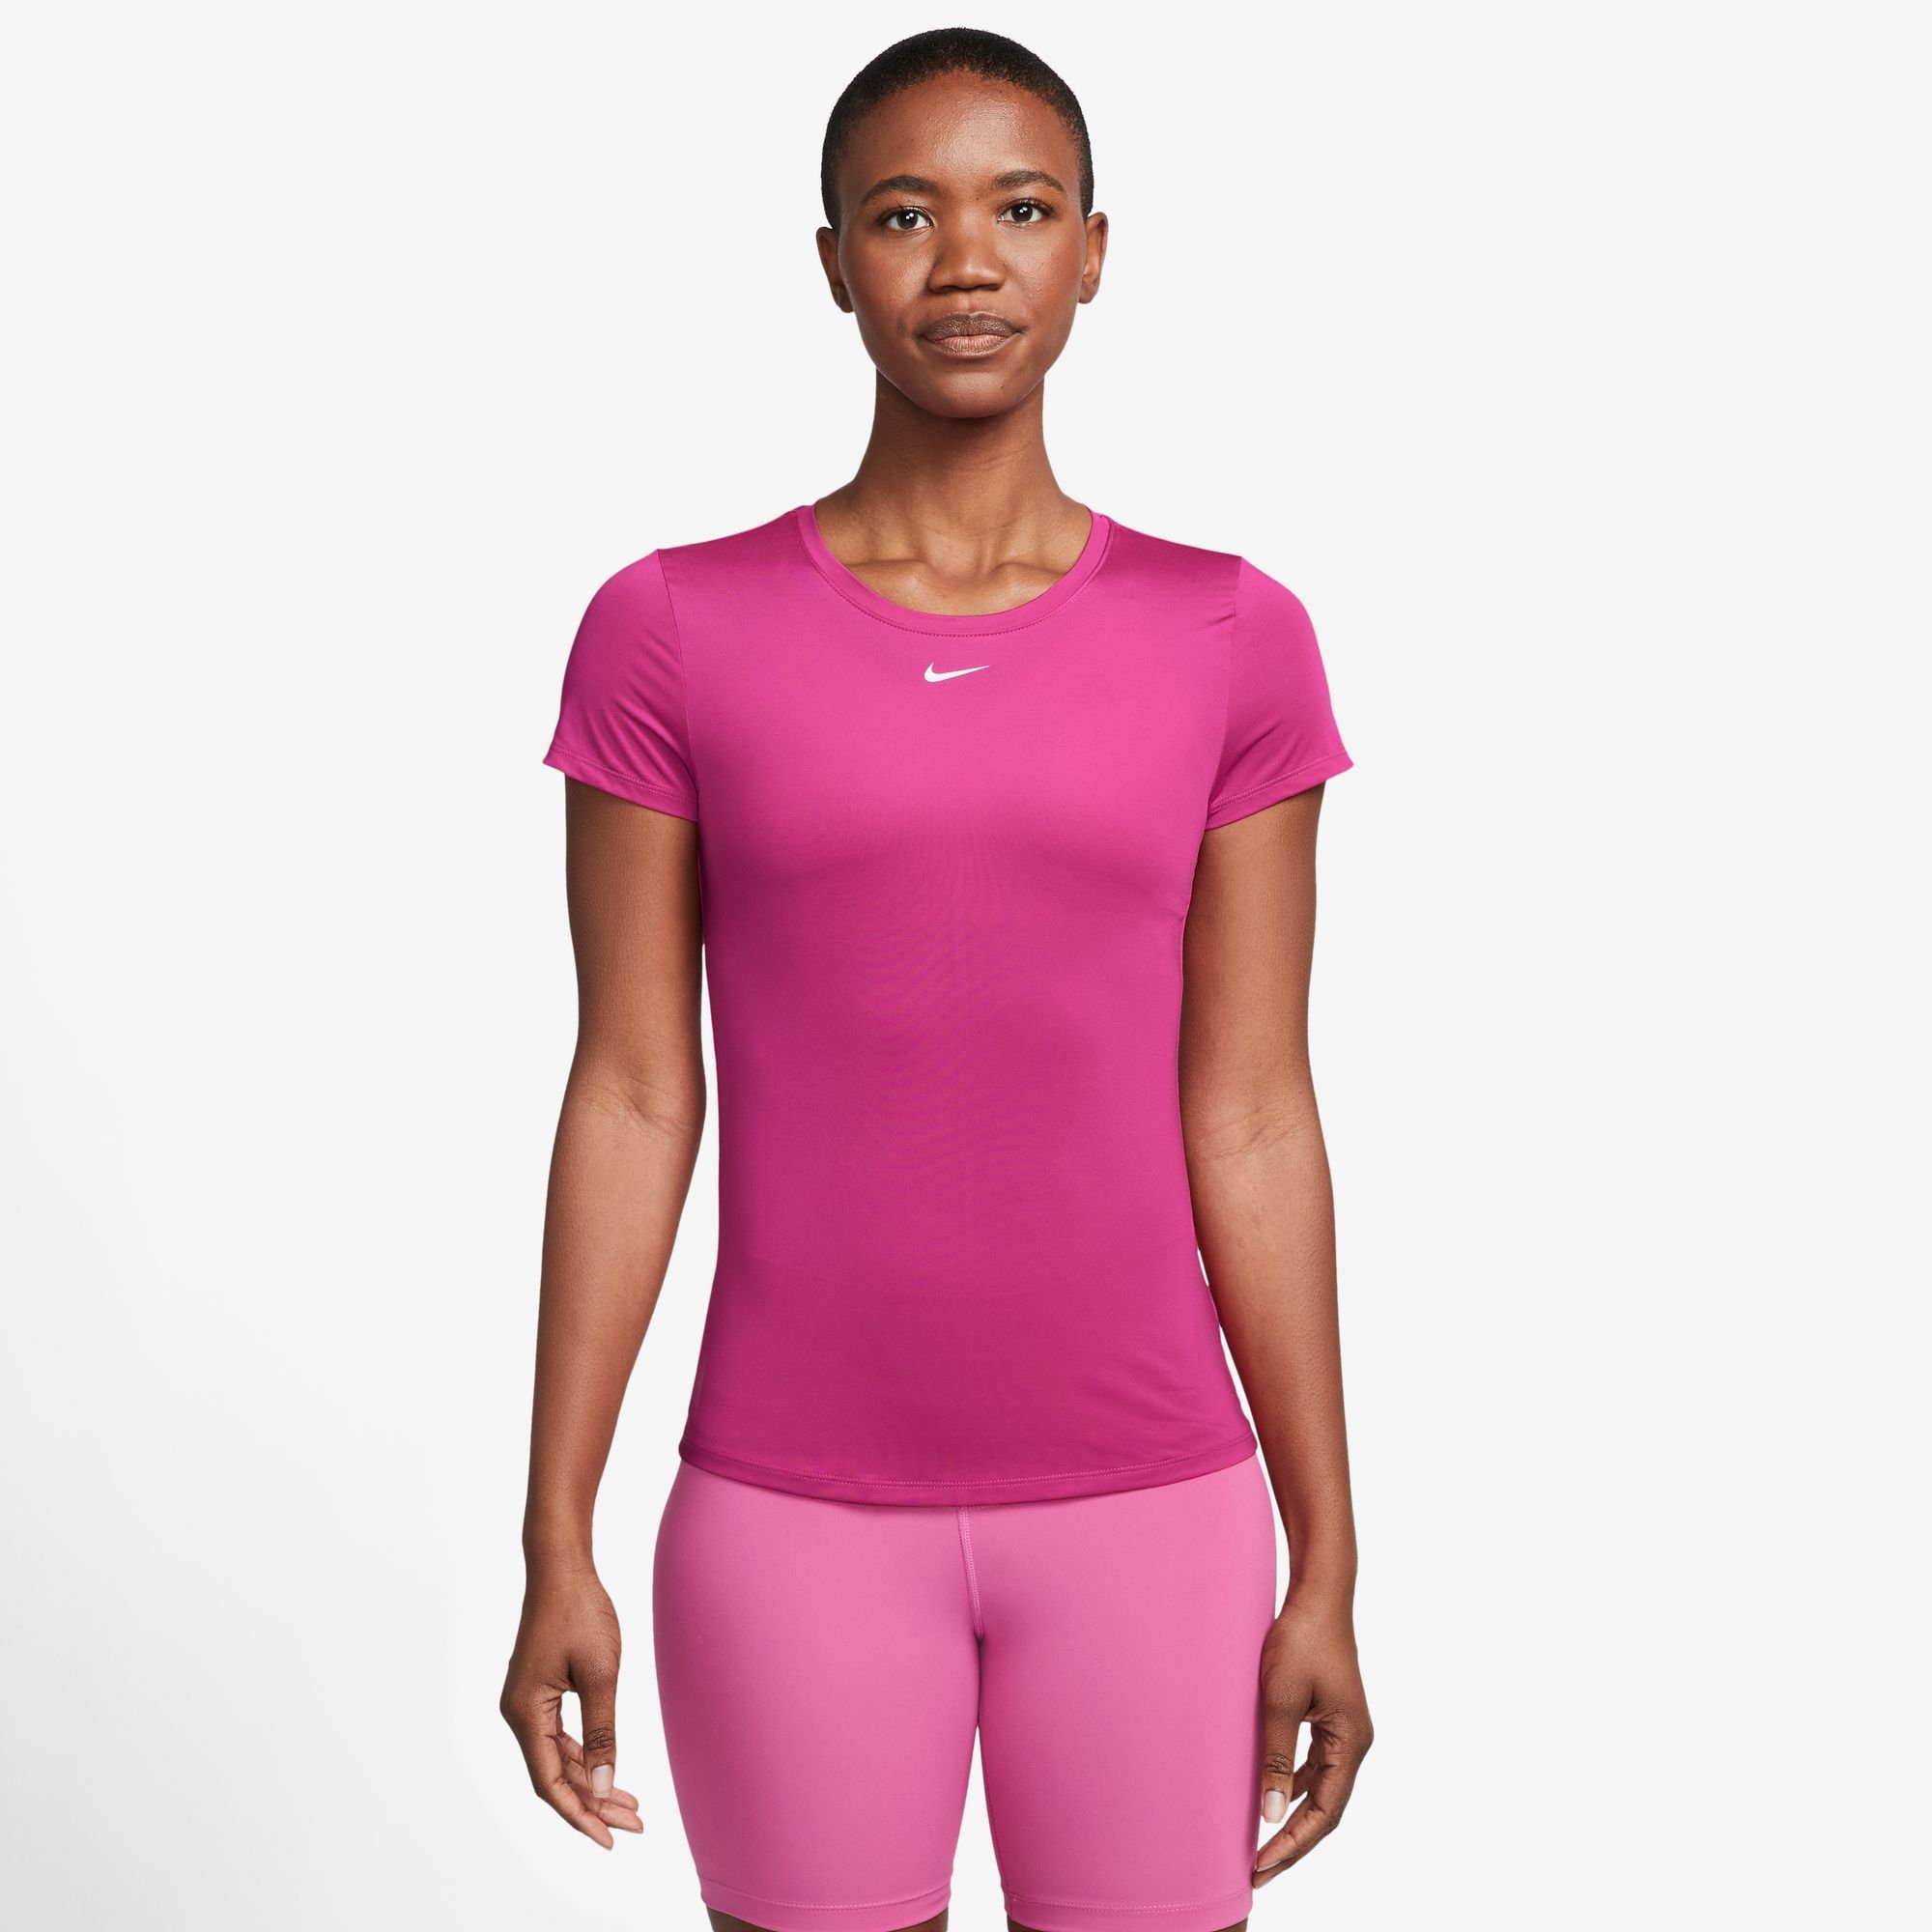 SLIM DRI-FIT FIT ONE SHORT-SLEEVE Nike WOMEN'S Trainingsshirt TOP FIREBERRY/WHITE